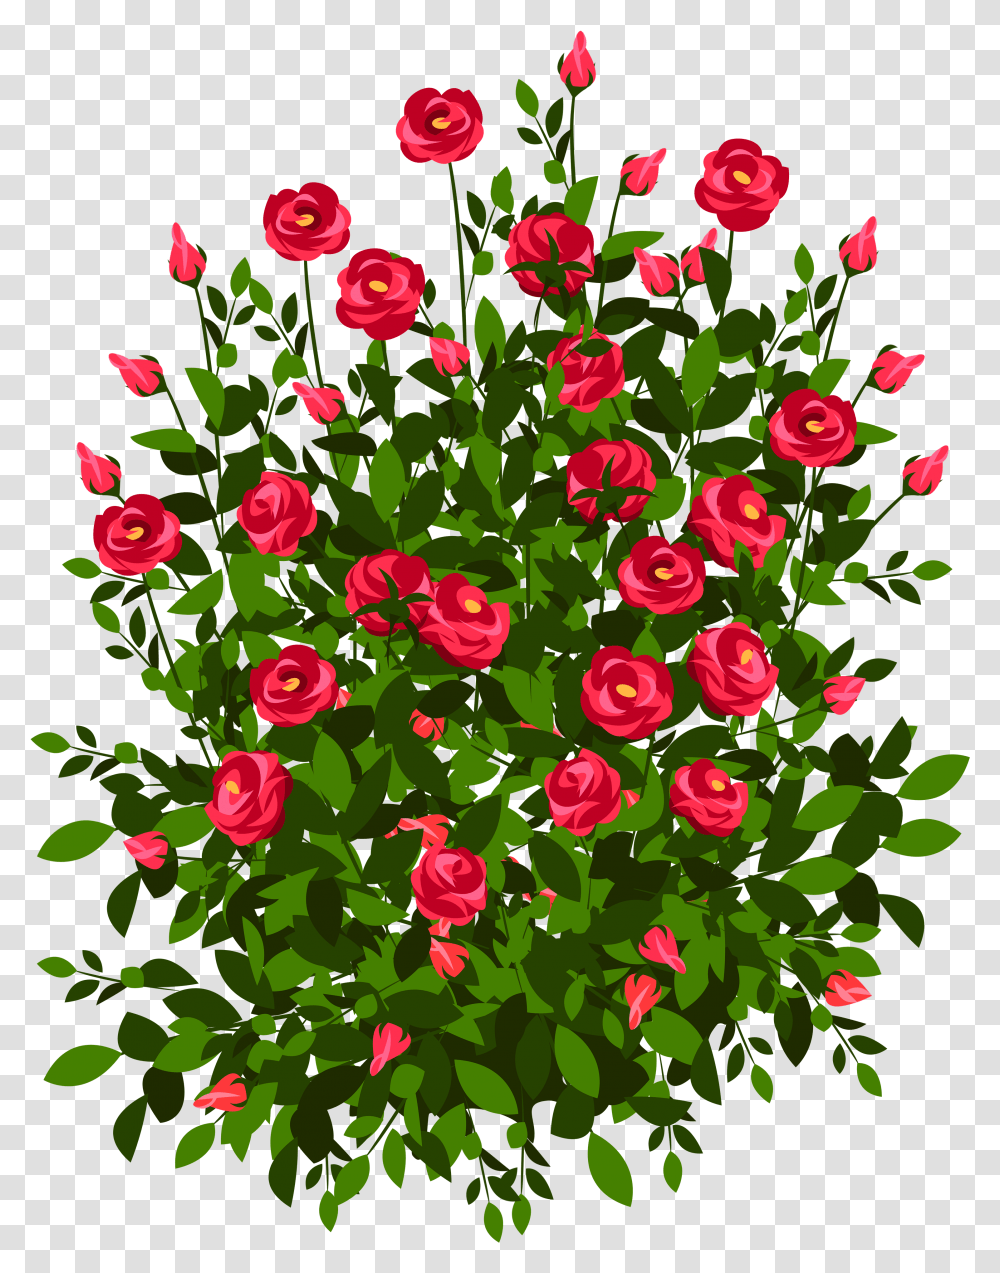 Flower Bush Clipart For Free Download Draw A Rose Bush, Graphics, Floral Design, Pattern, Green Transparent Png